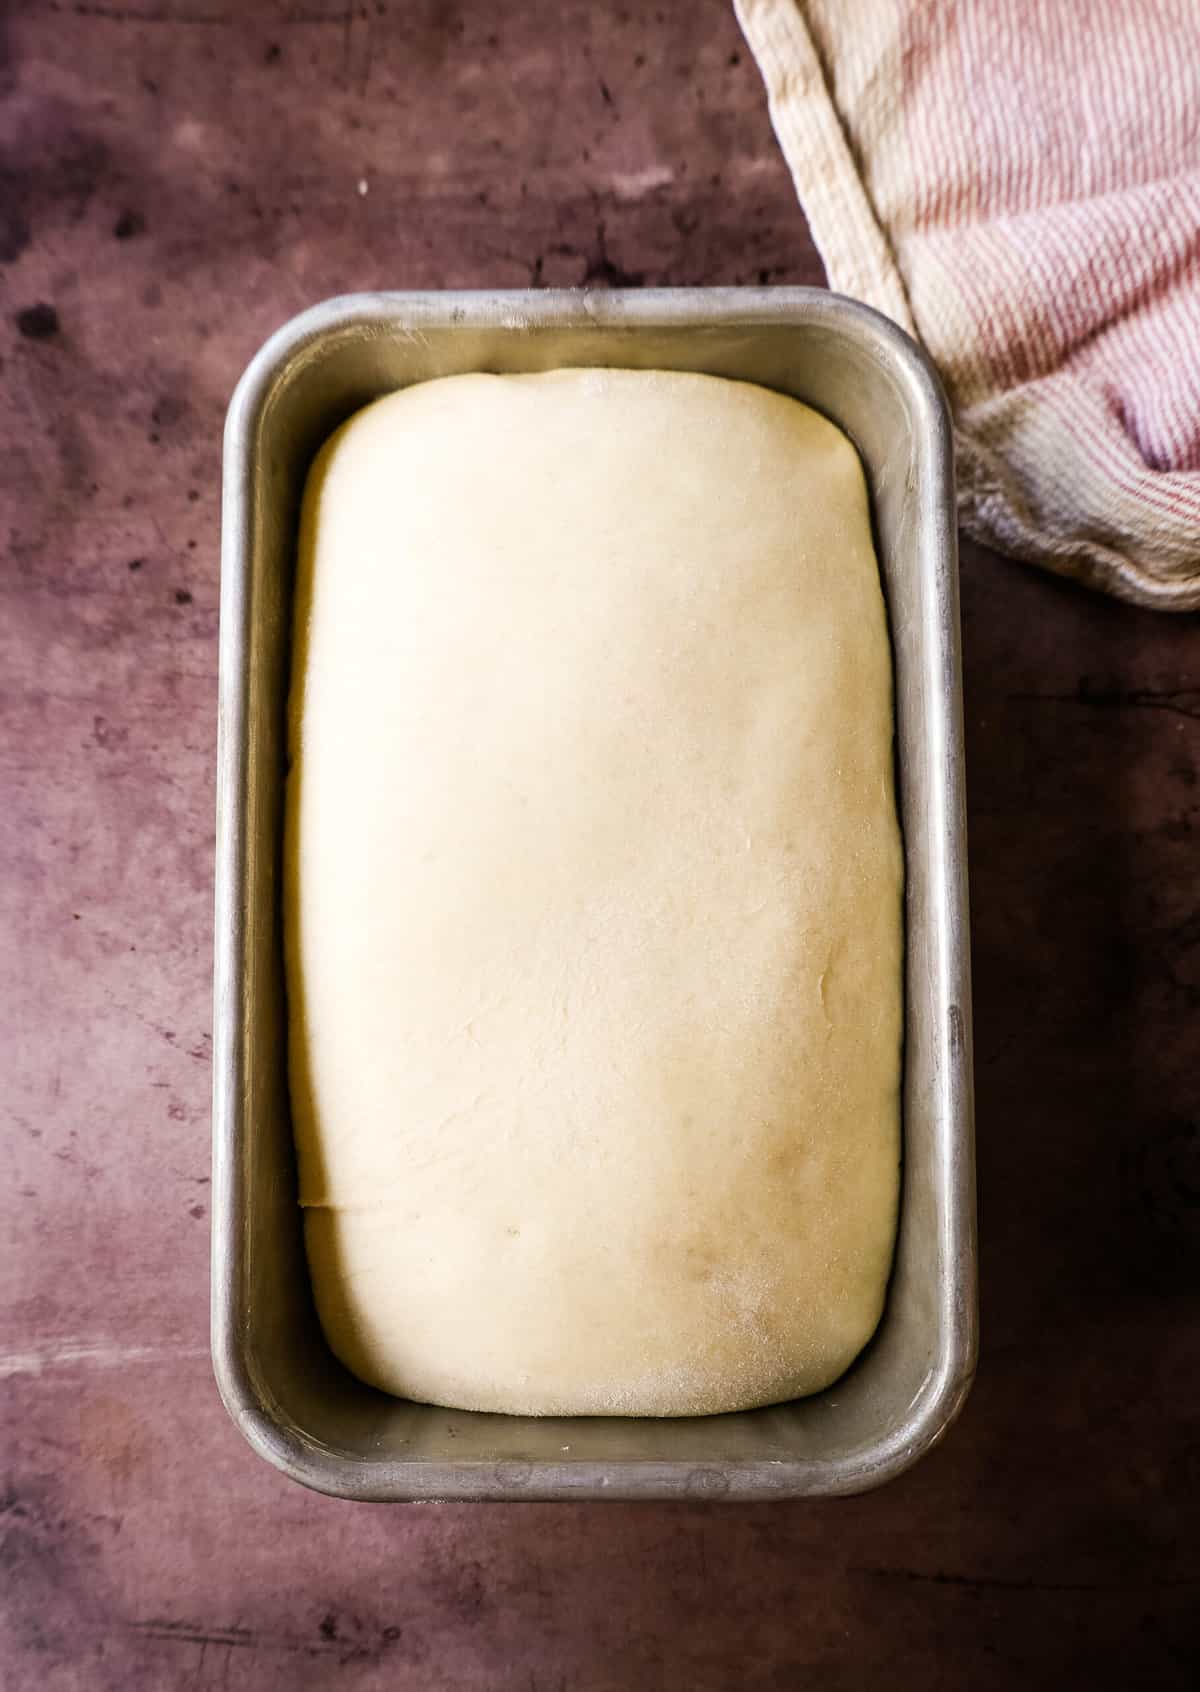 White Sandwich Bread Dough before Baking